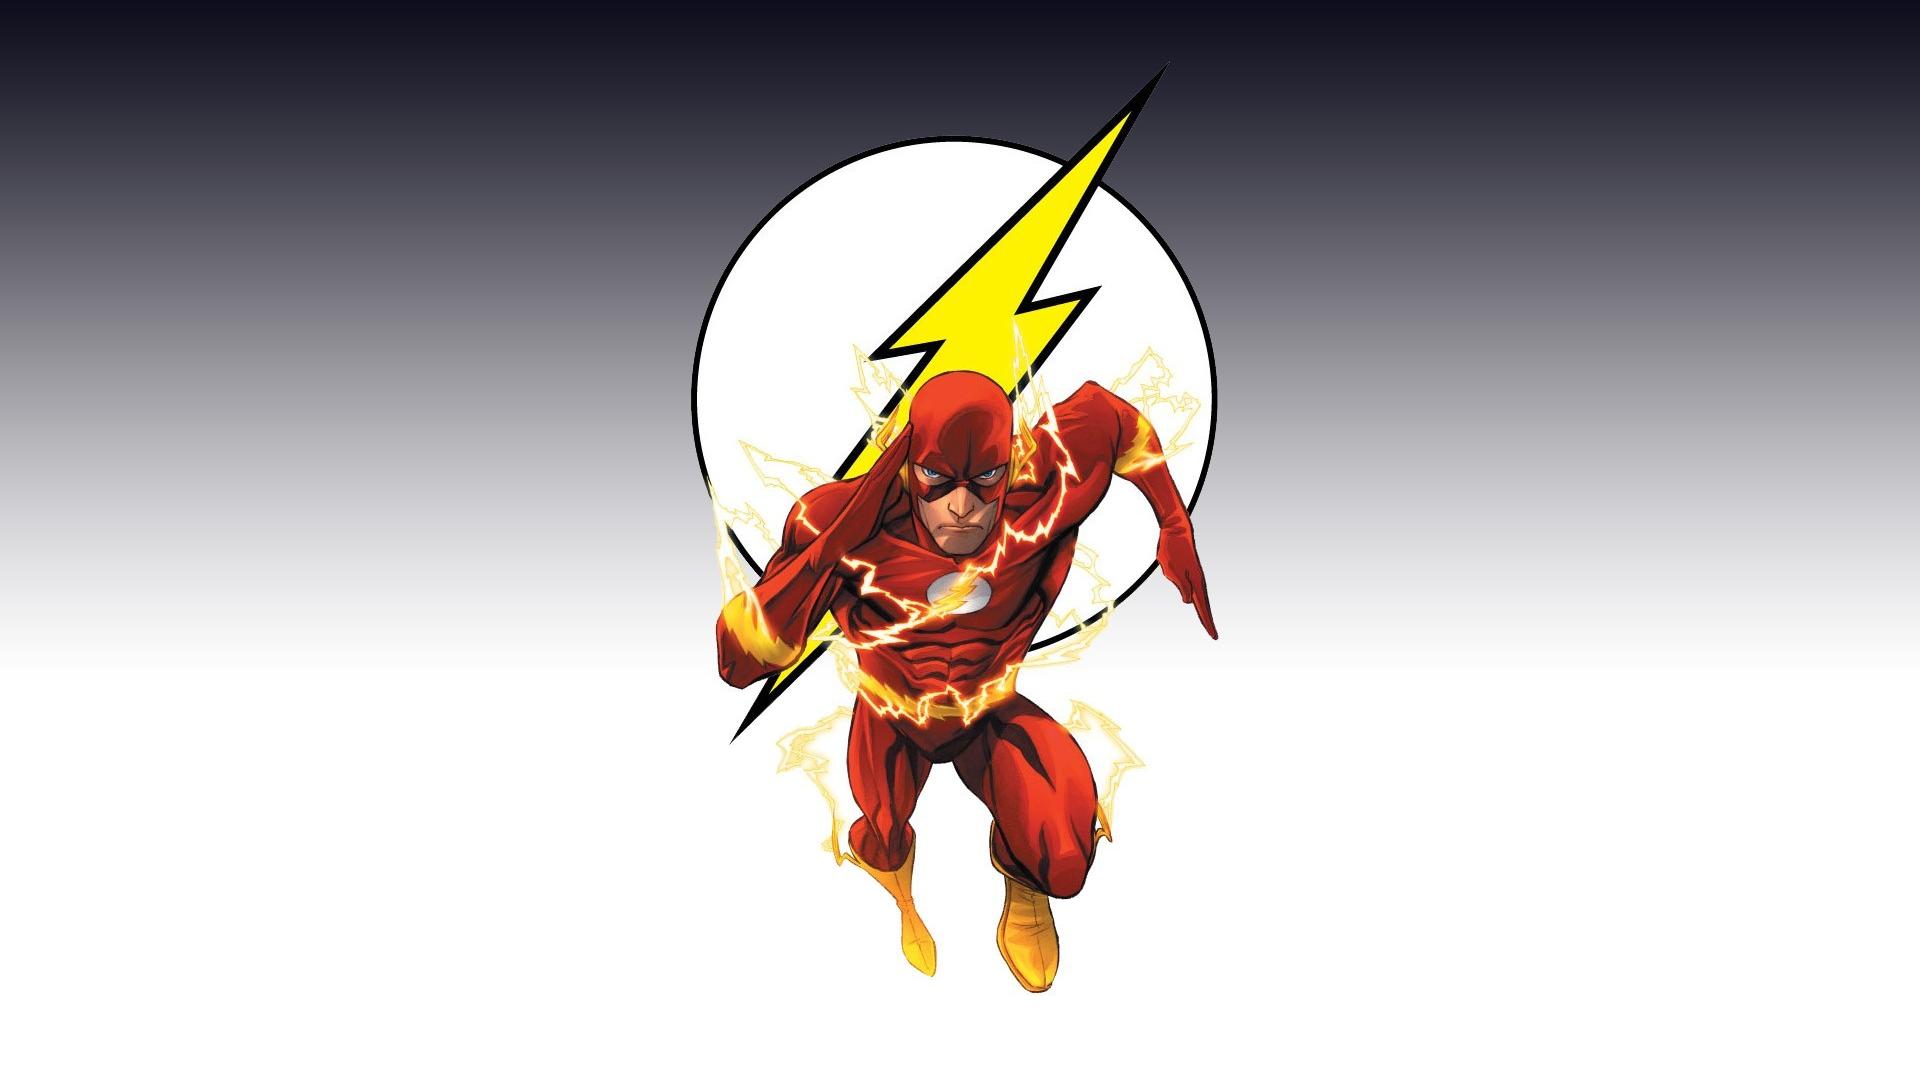 Dc comics superheroes flash comic hero wallpaper 17162 1920x1080